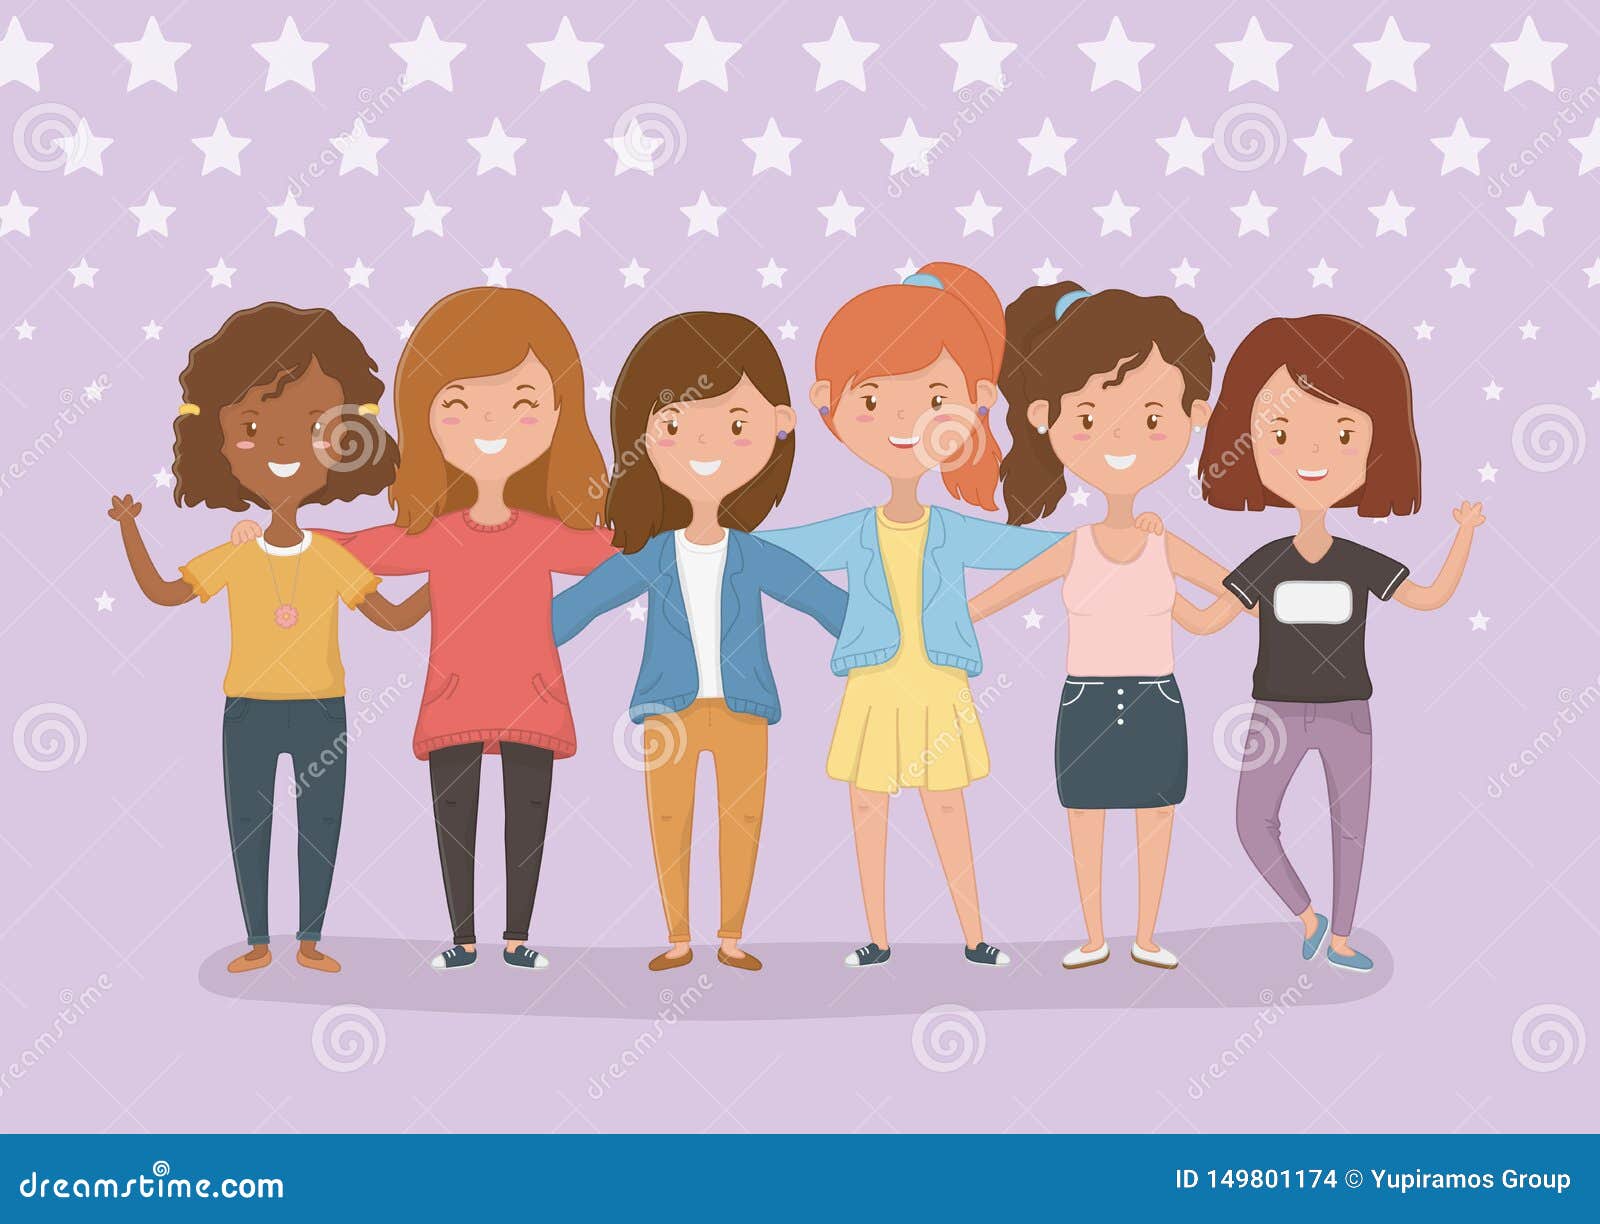 Friendship of Girls Cartoons Design Stock Vector - Illustration of girls,  group: 149801174